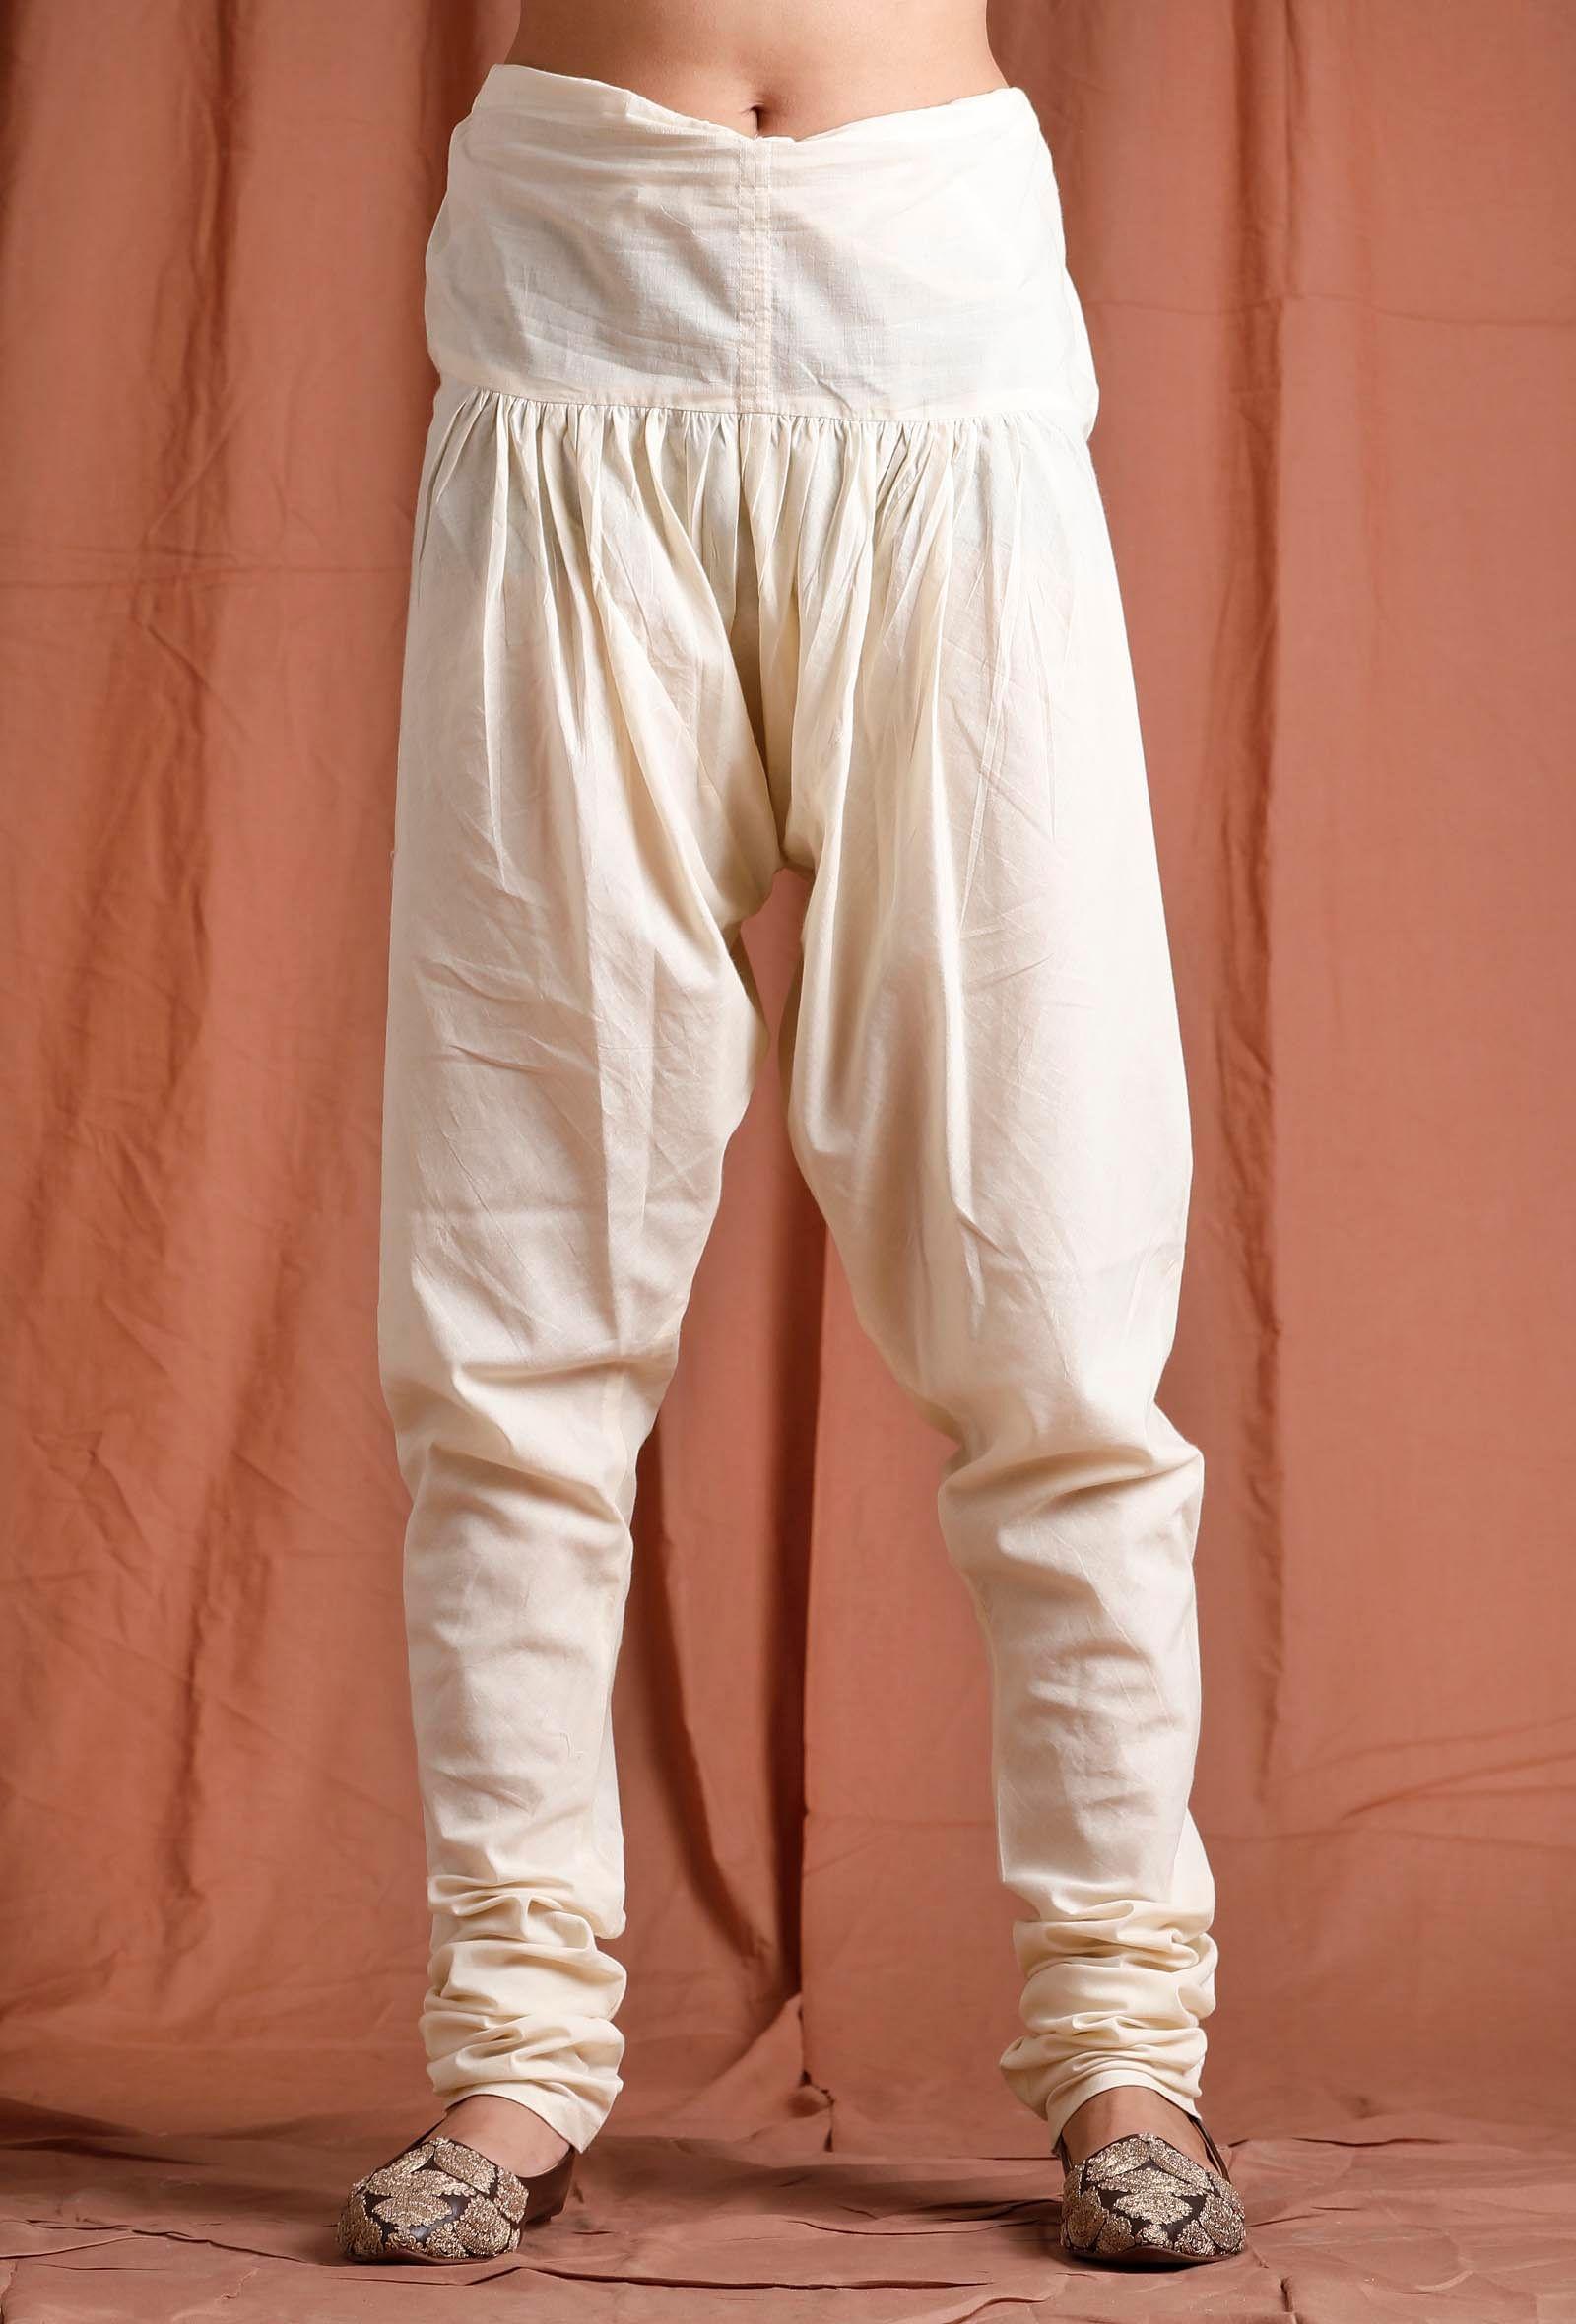 off-white-cotton-churidar-pants